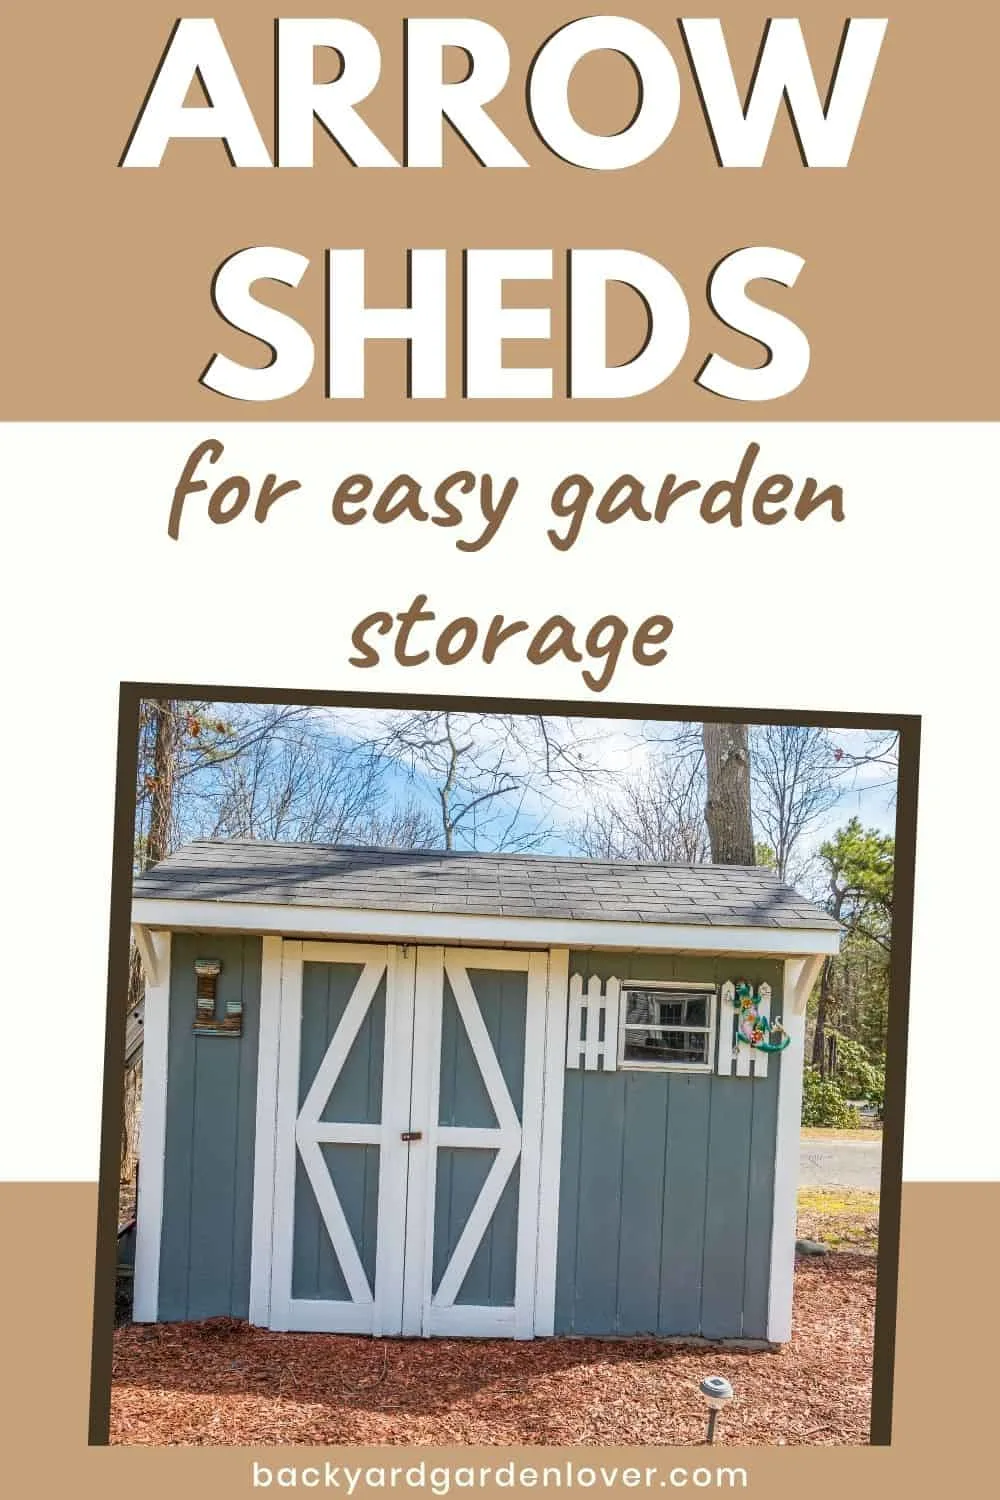 Arrow sheds for easy garden storage